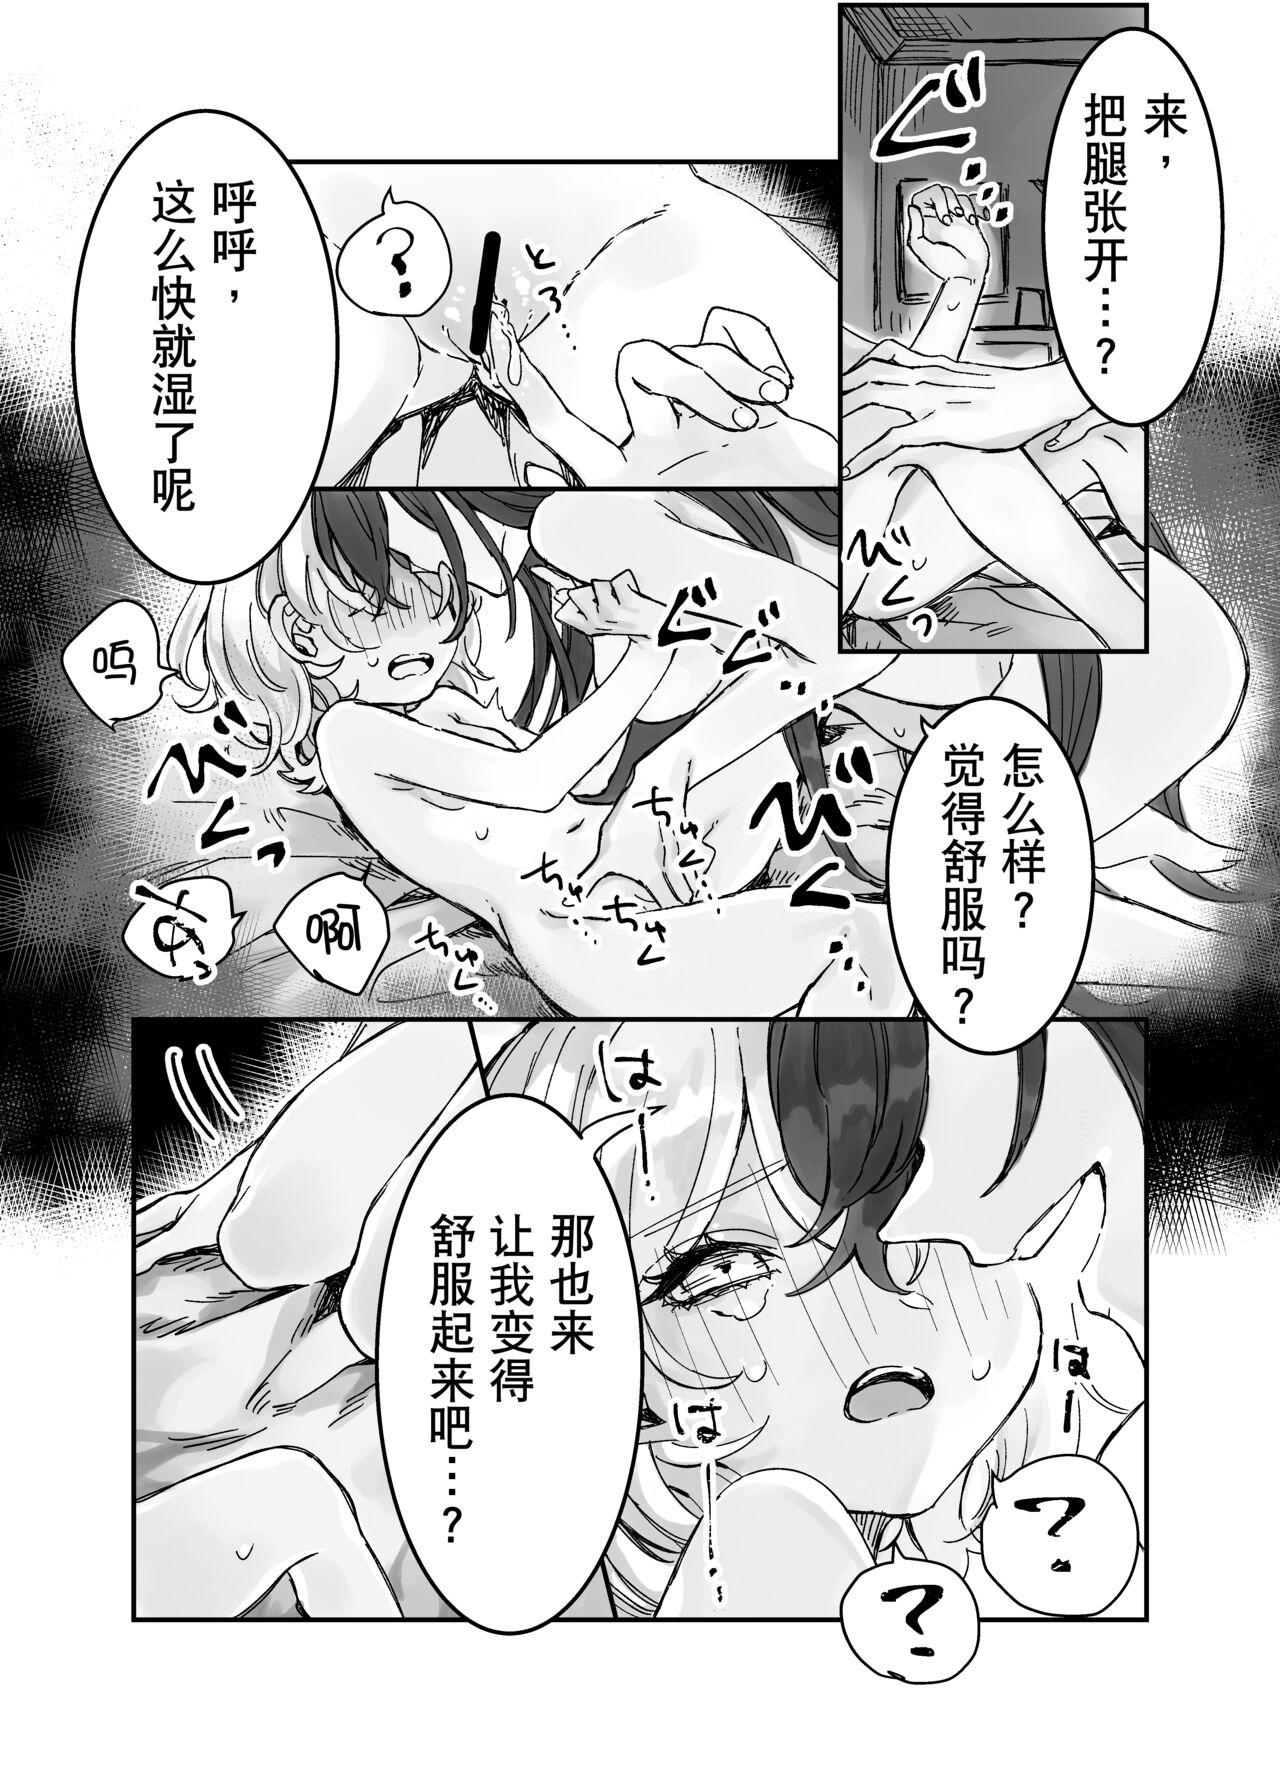 Nalgas Skeb Request Manga - Original Blows - Page 5